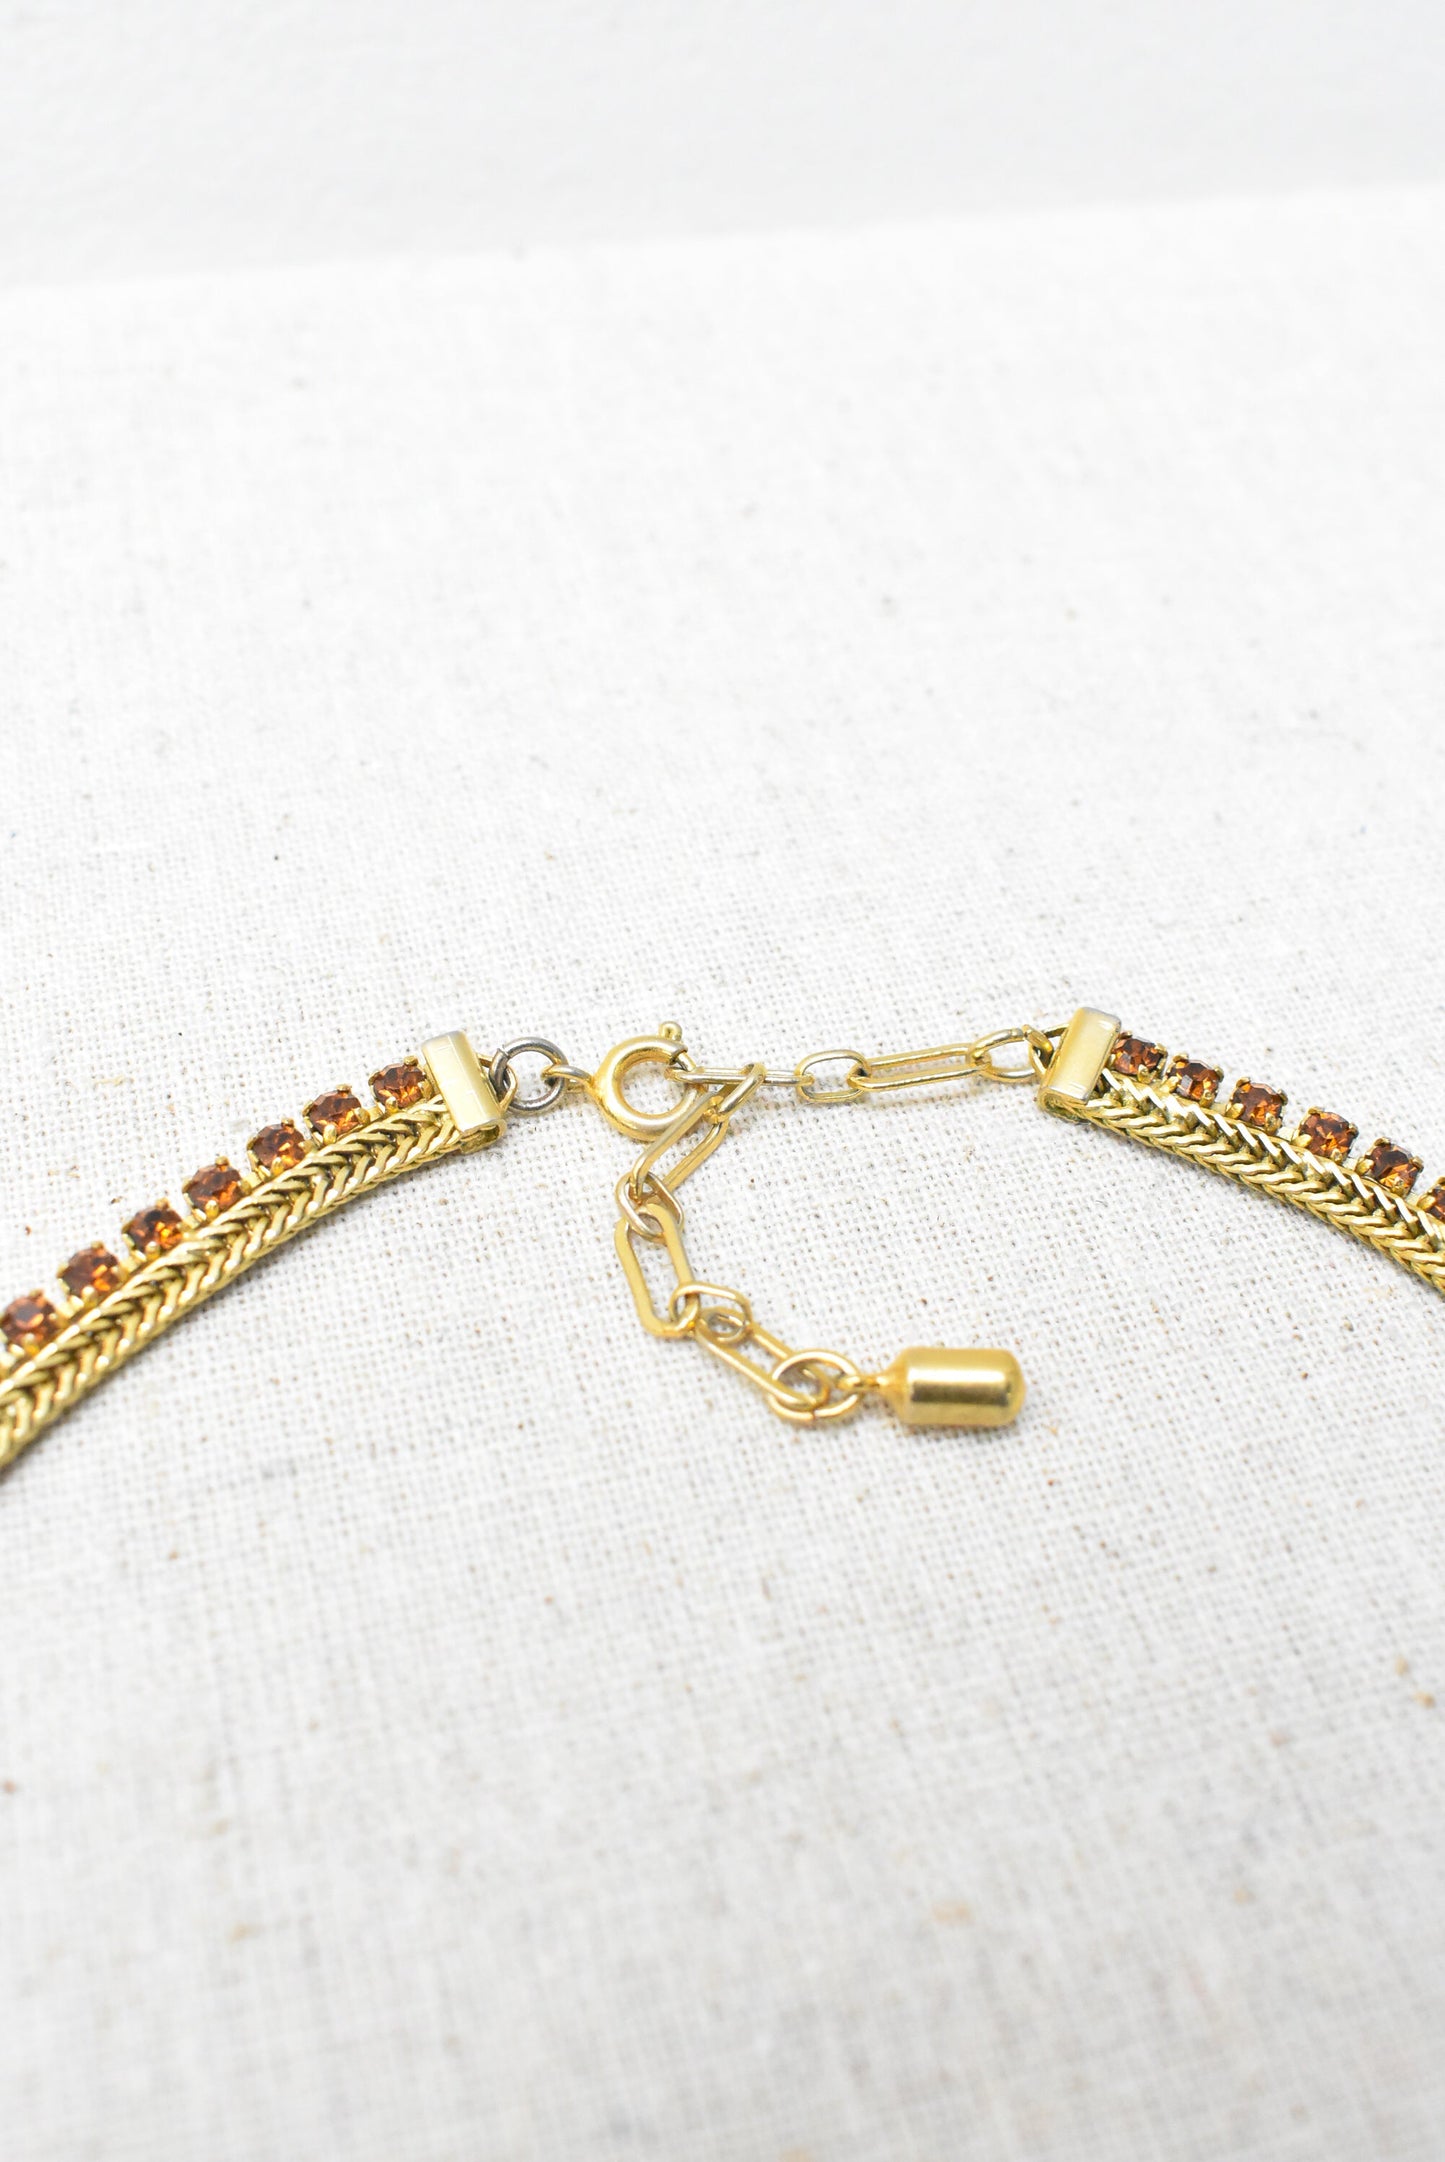 Vintage choker style golden diamante necklace